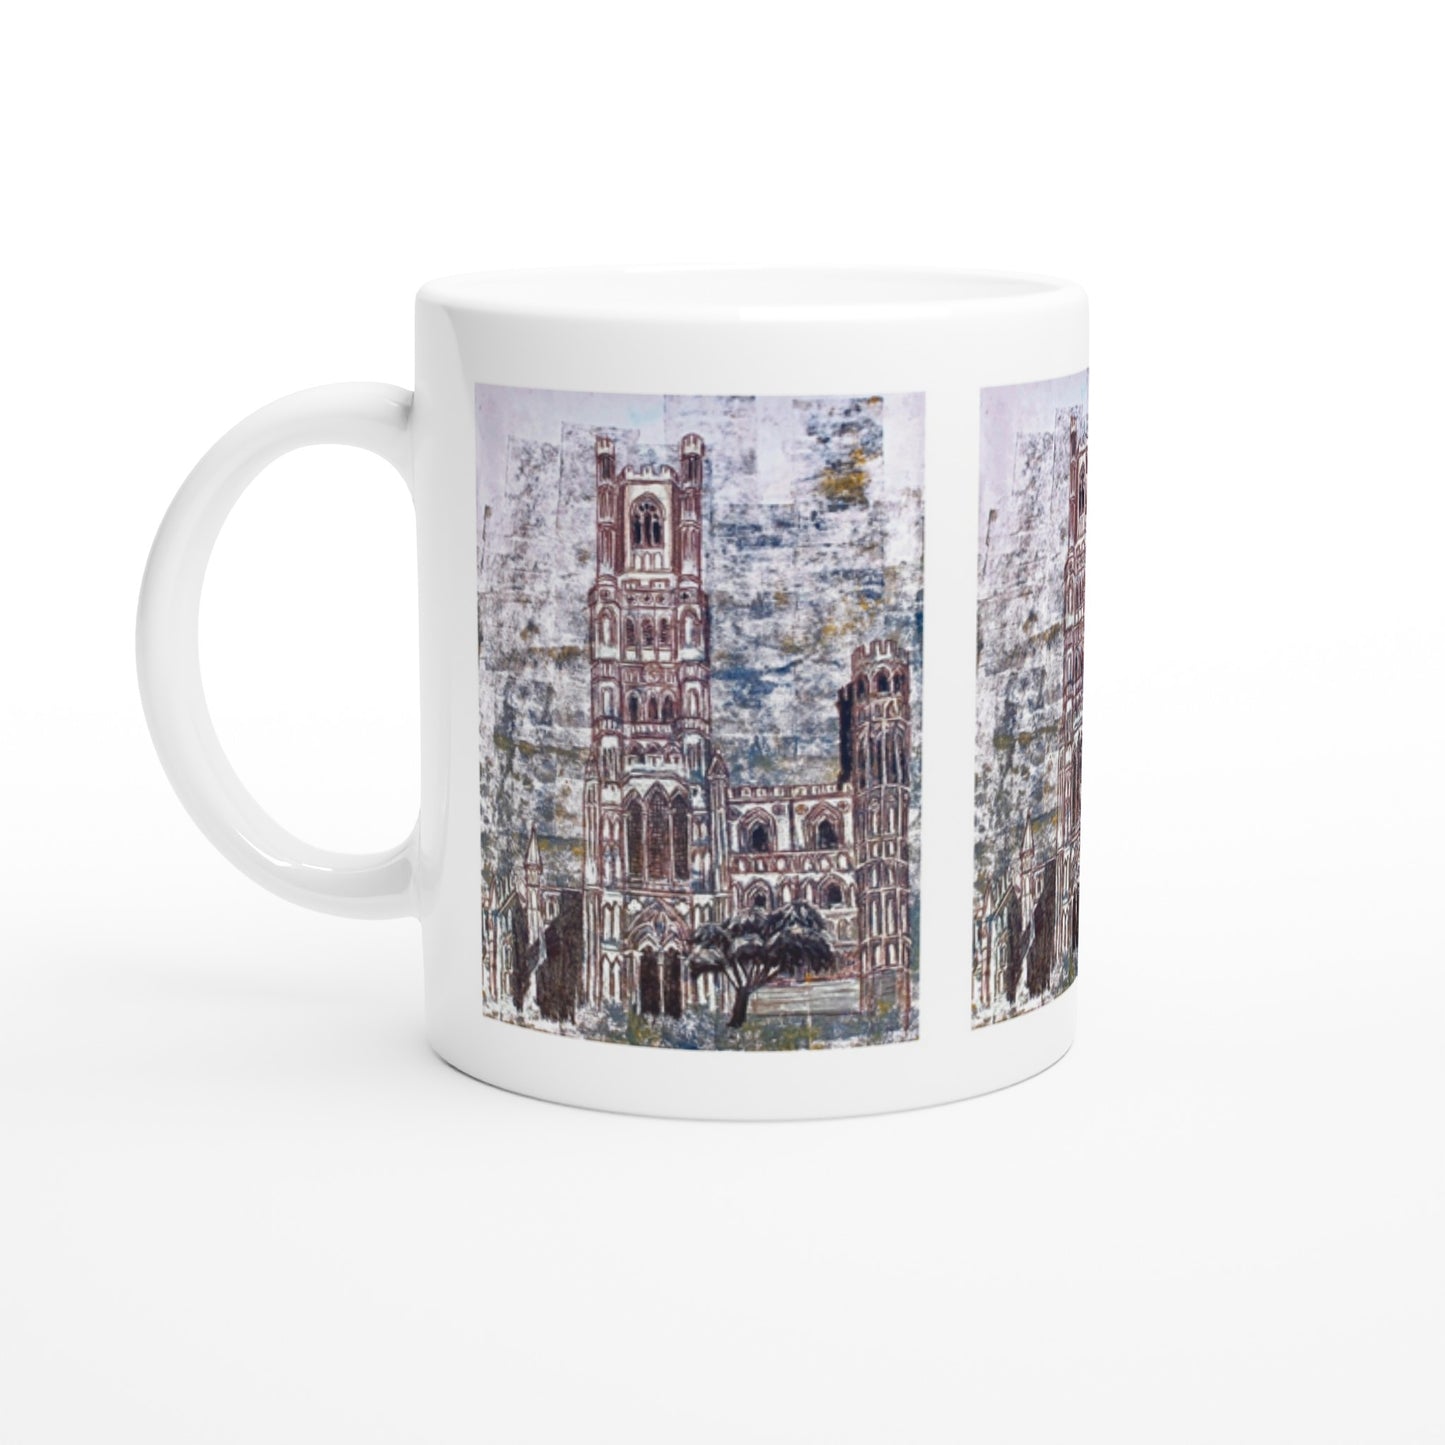 Charcoal Ely Cathedral Ceramic Mug